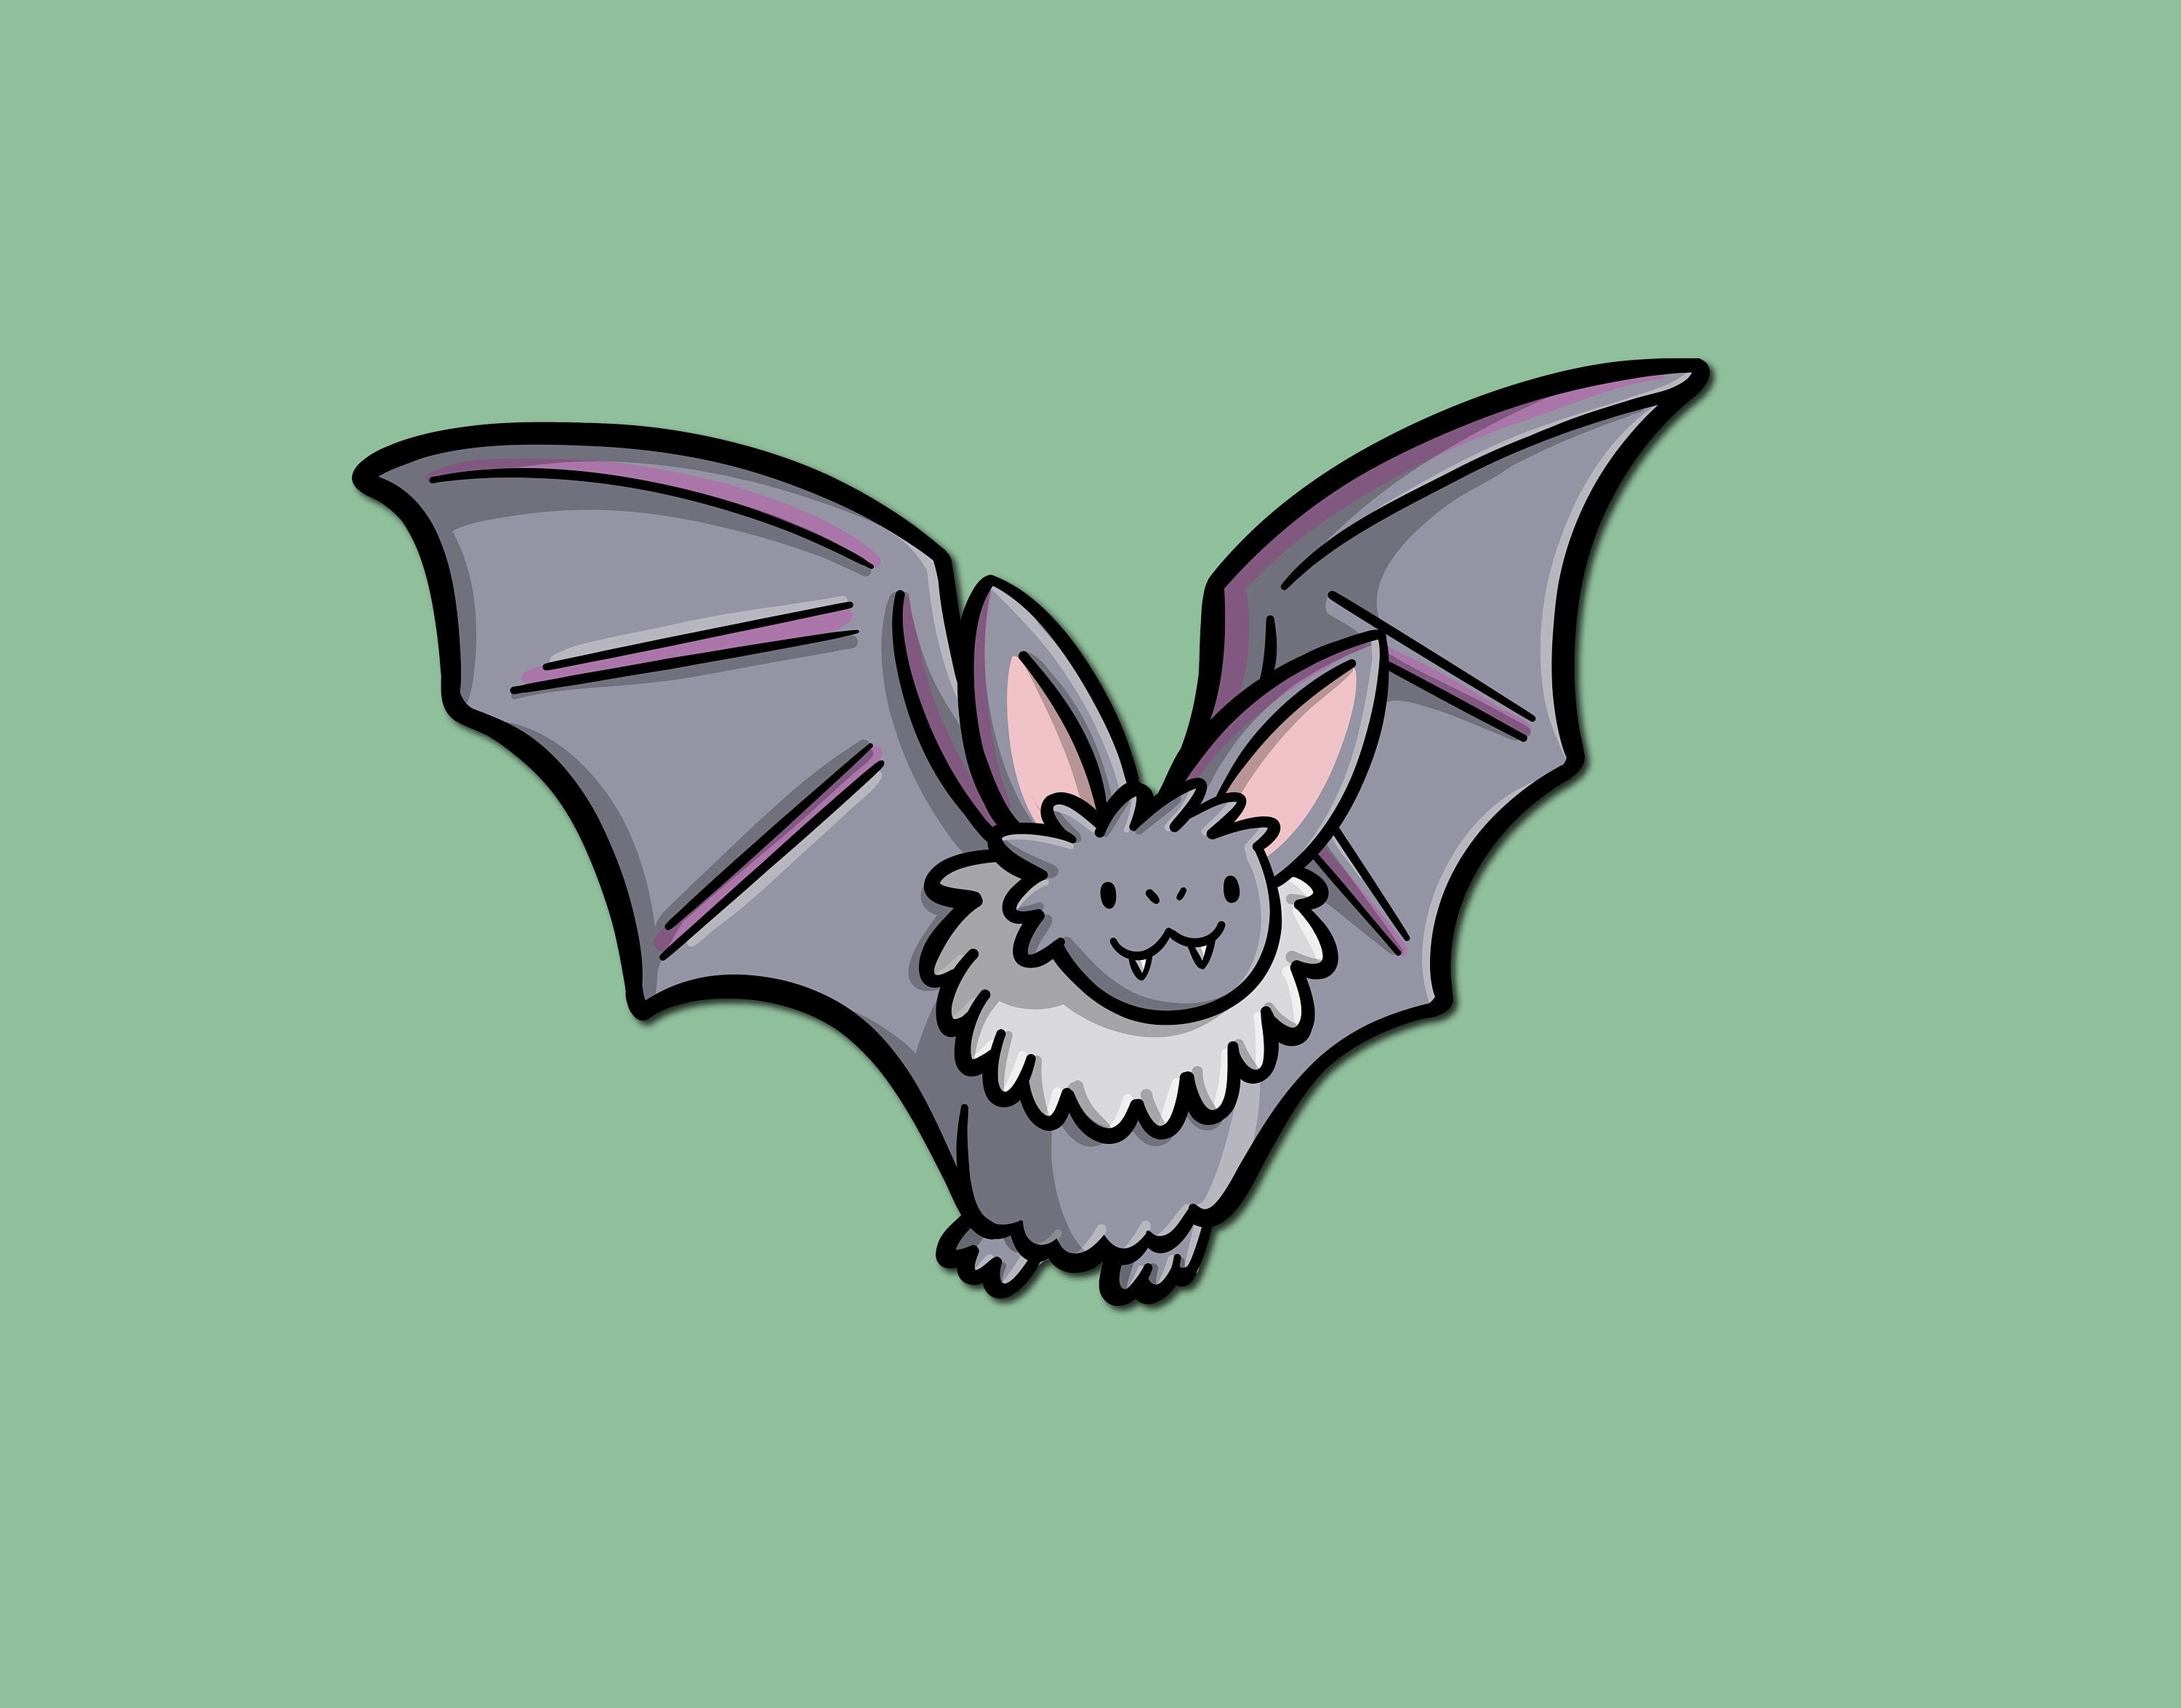 Vampire Bat Sticker